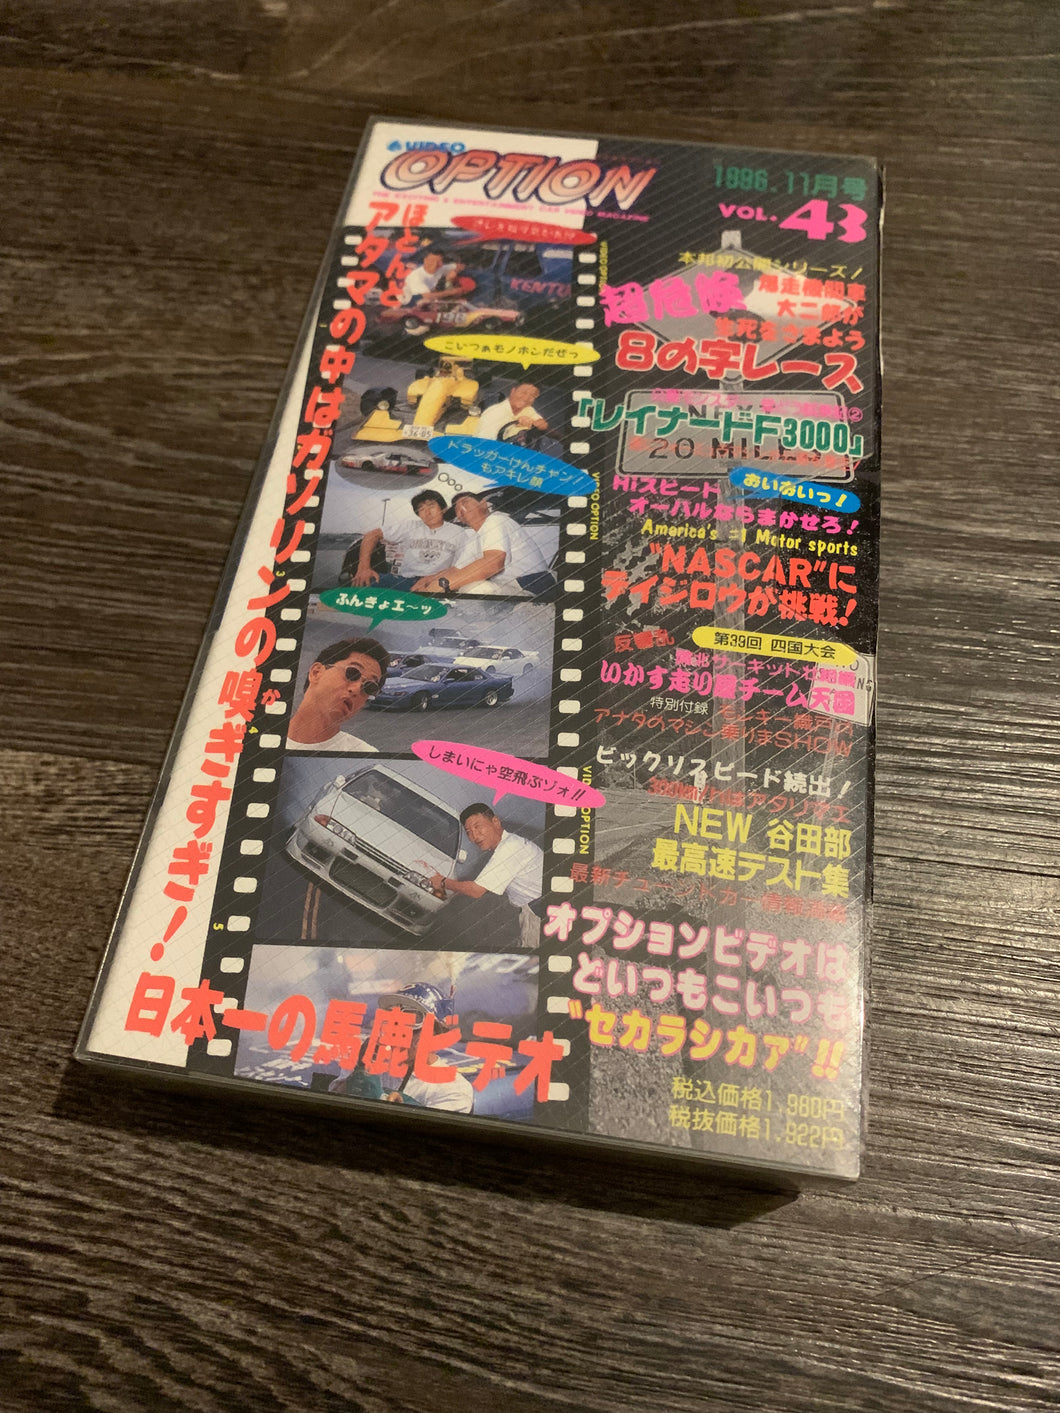 Option VHS Nov. 1996 Volume 43